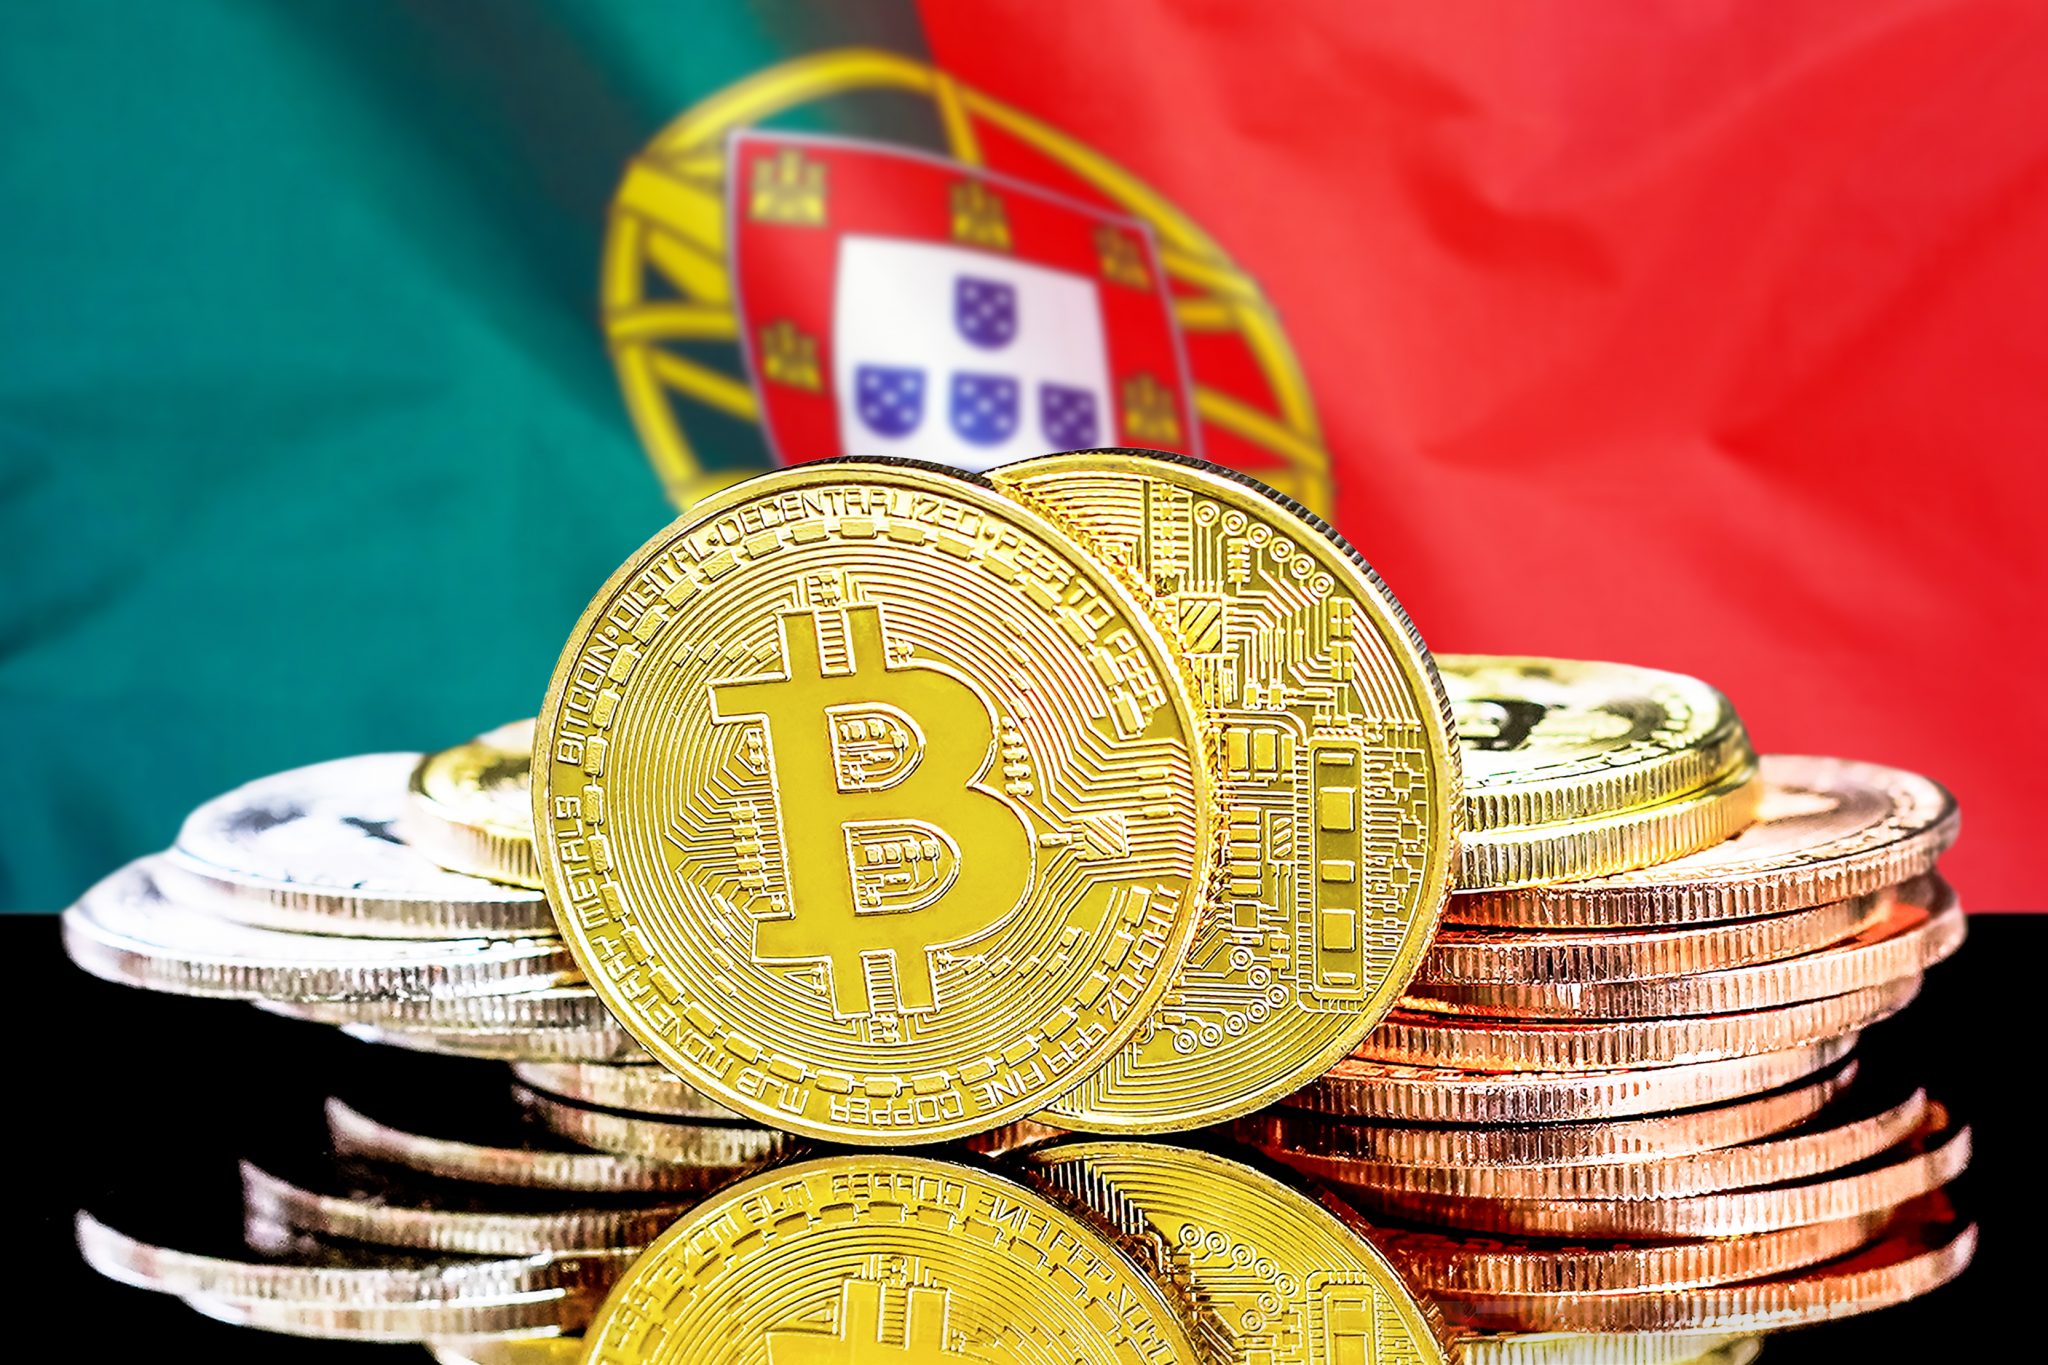 Europe's Bitcoin heaven with zero percent tax on crypto